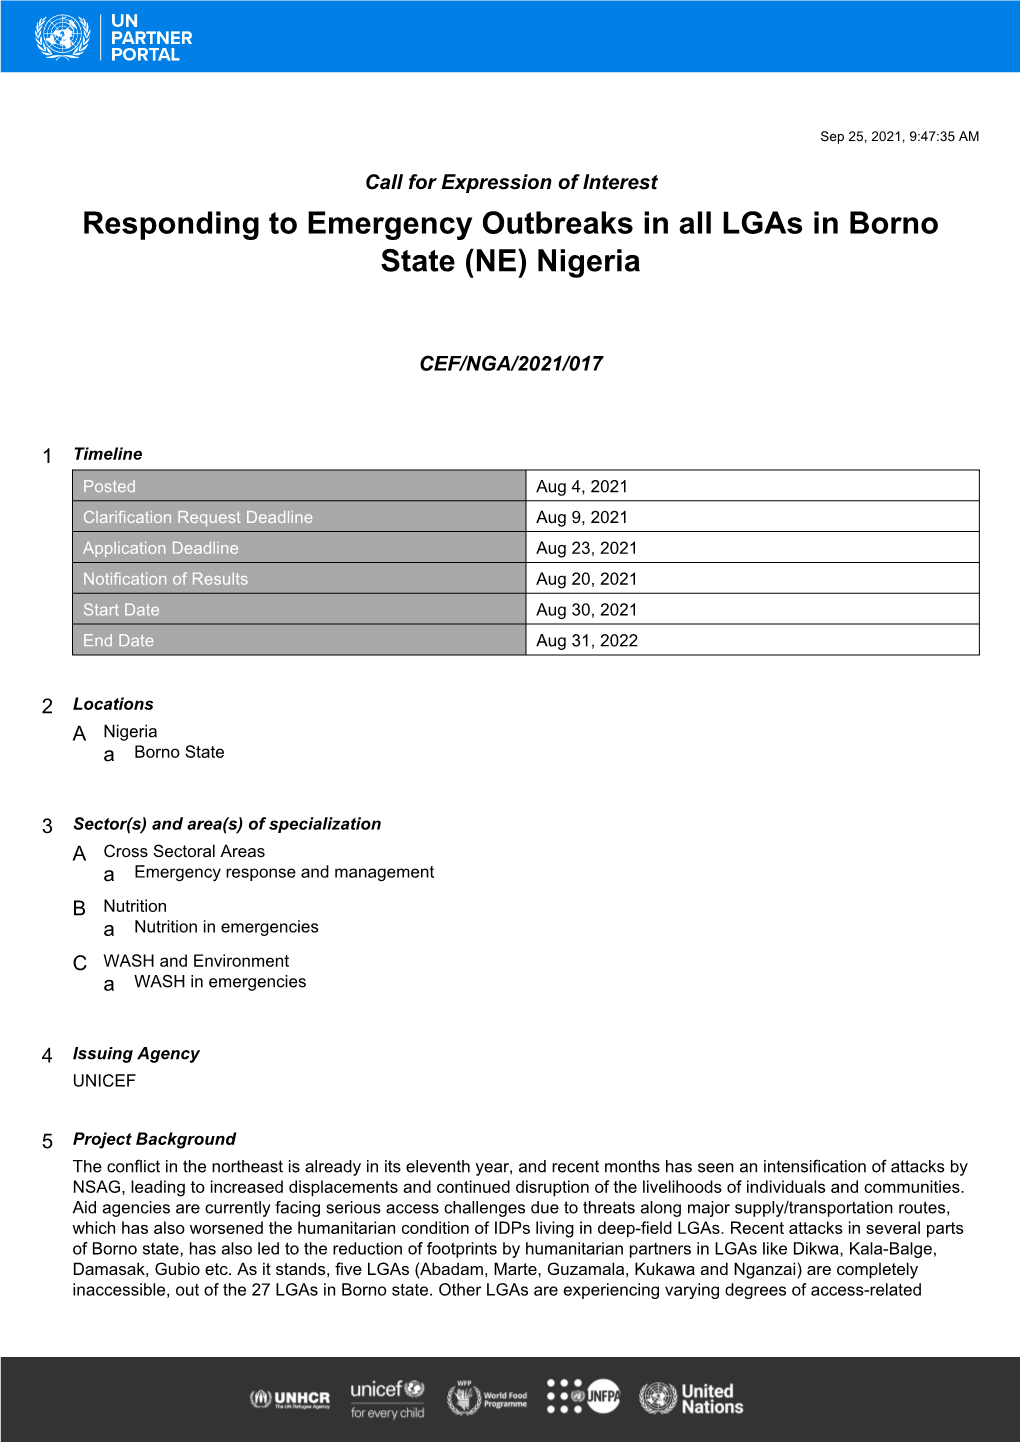 Responding to Emergency Outbreaks in All Lgas in Borno State (NE) Nigeria